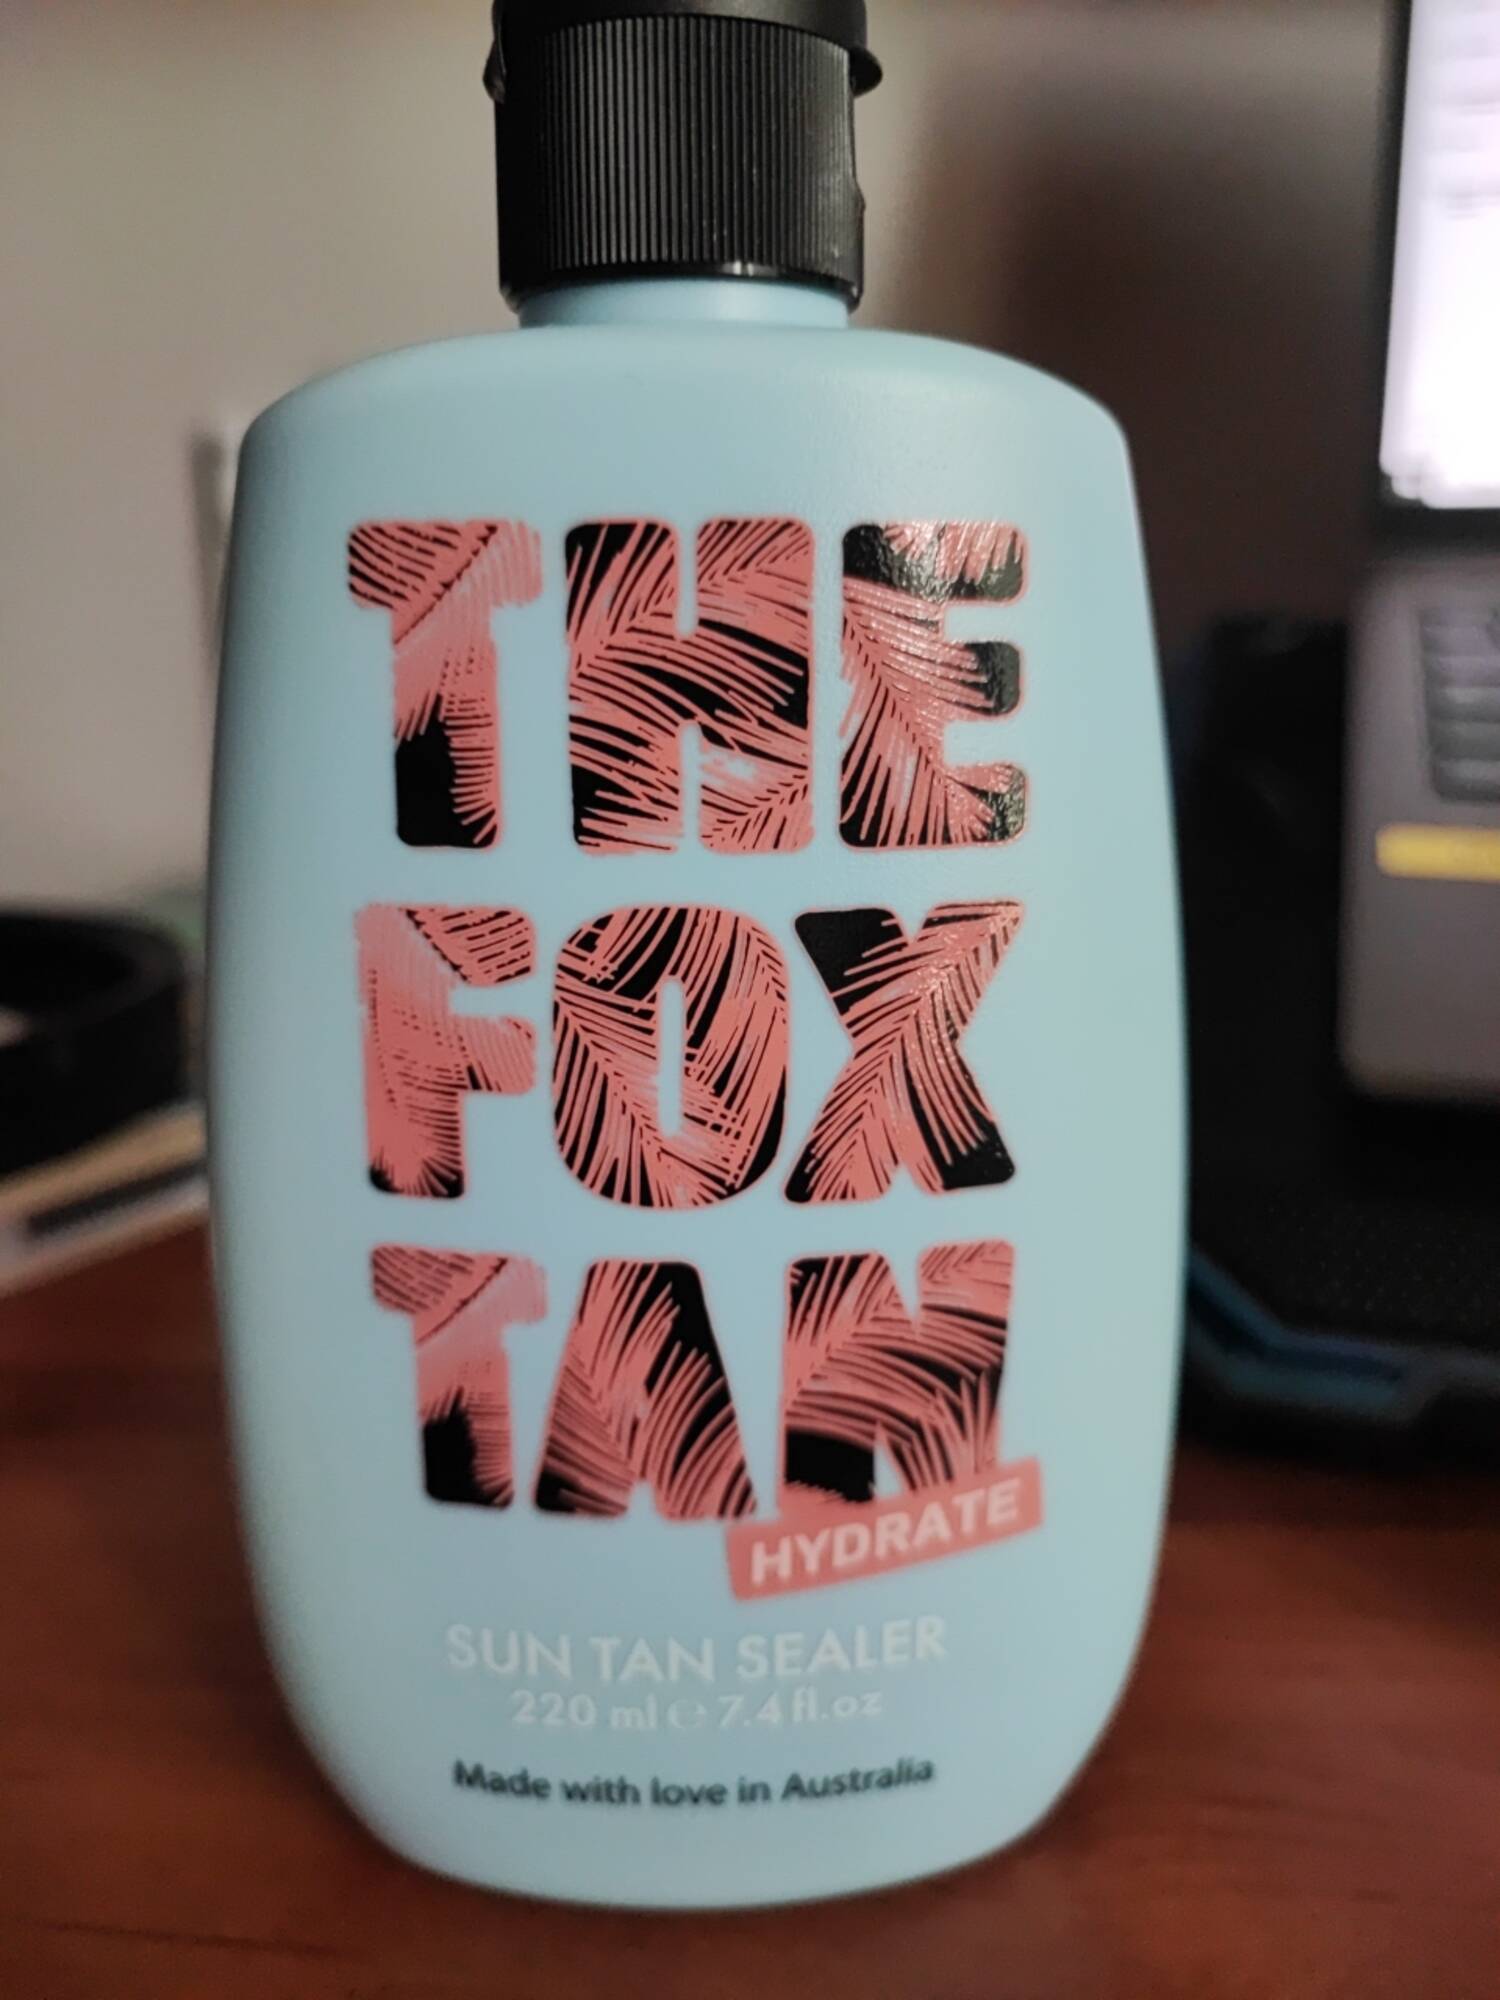 THE FOX TAN - Sun tan sealer hydrate